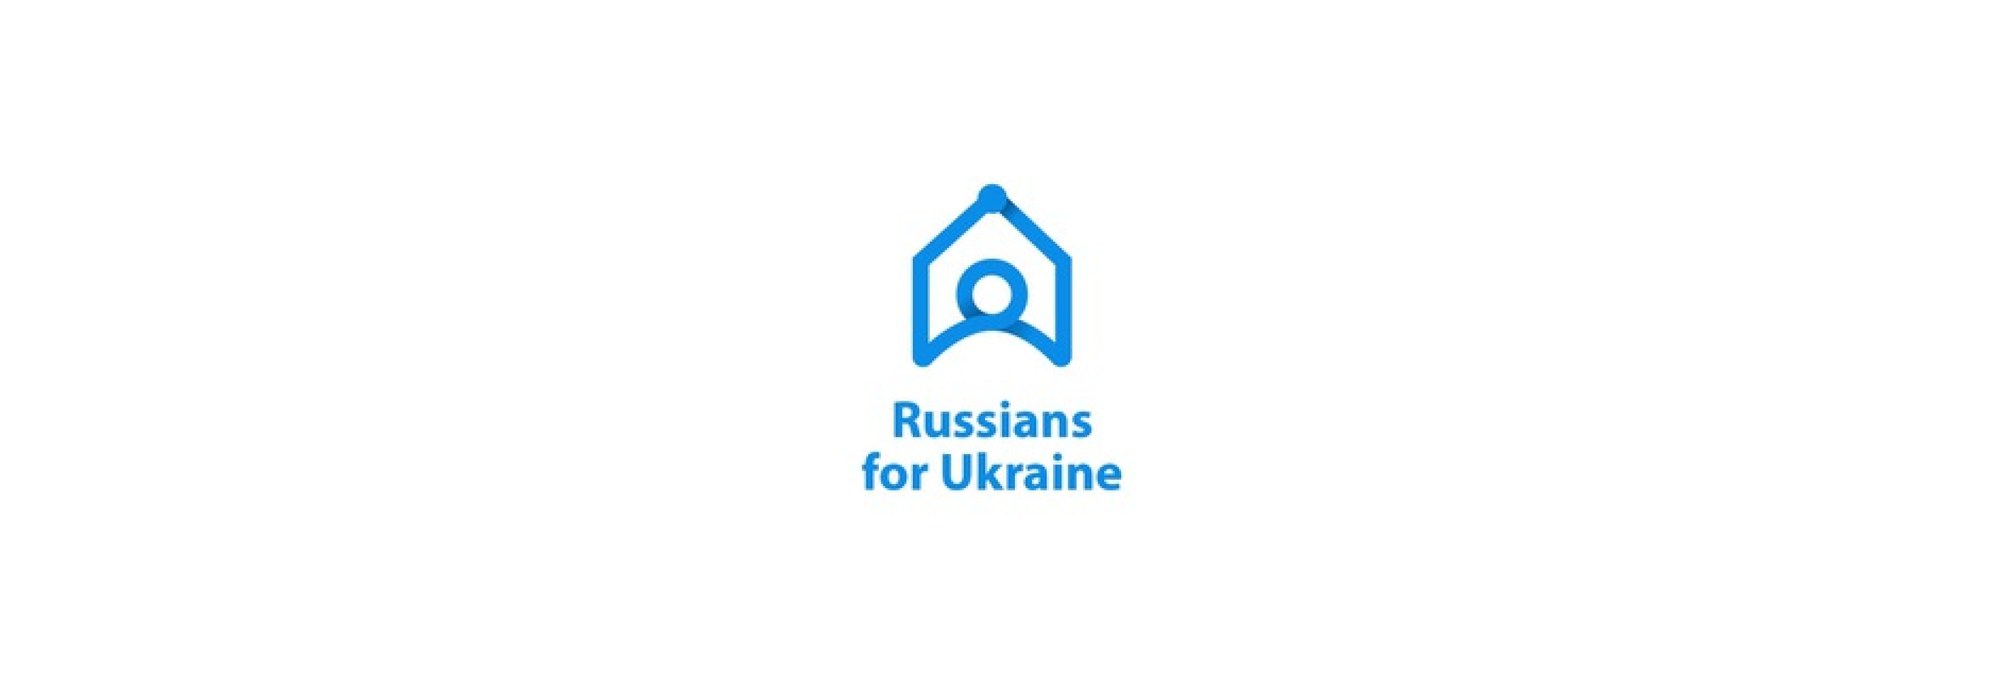 Russians for Ukraine